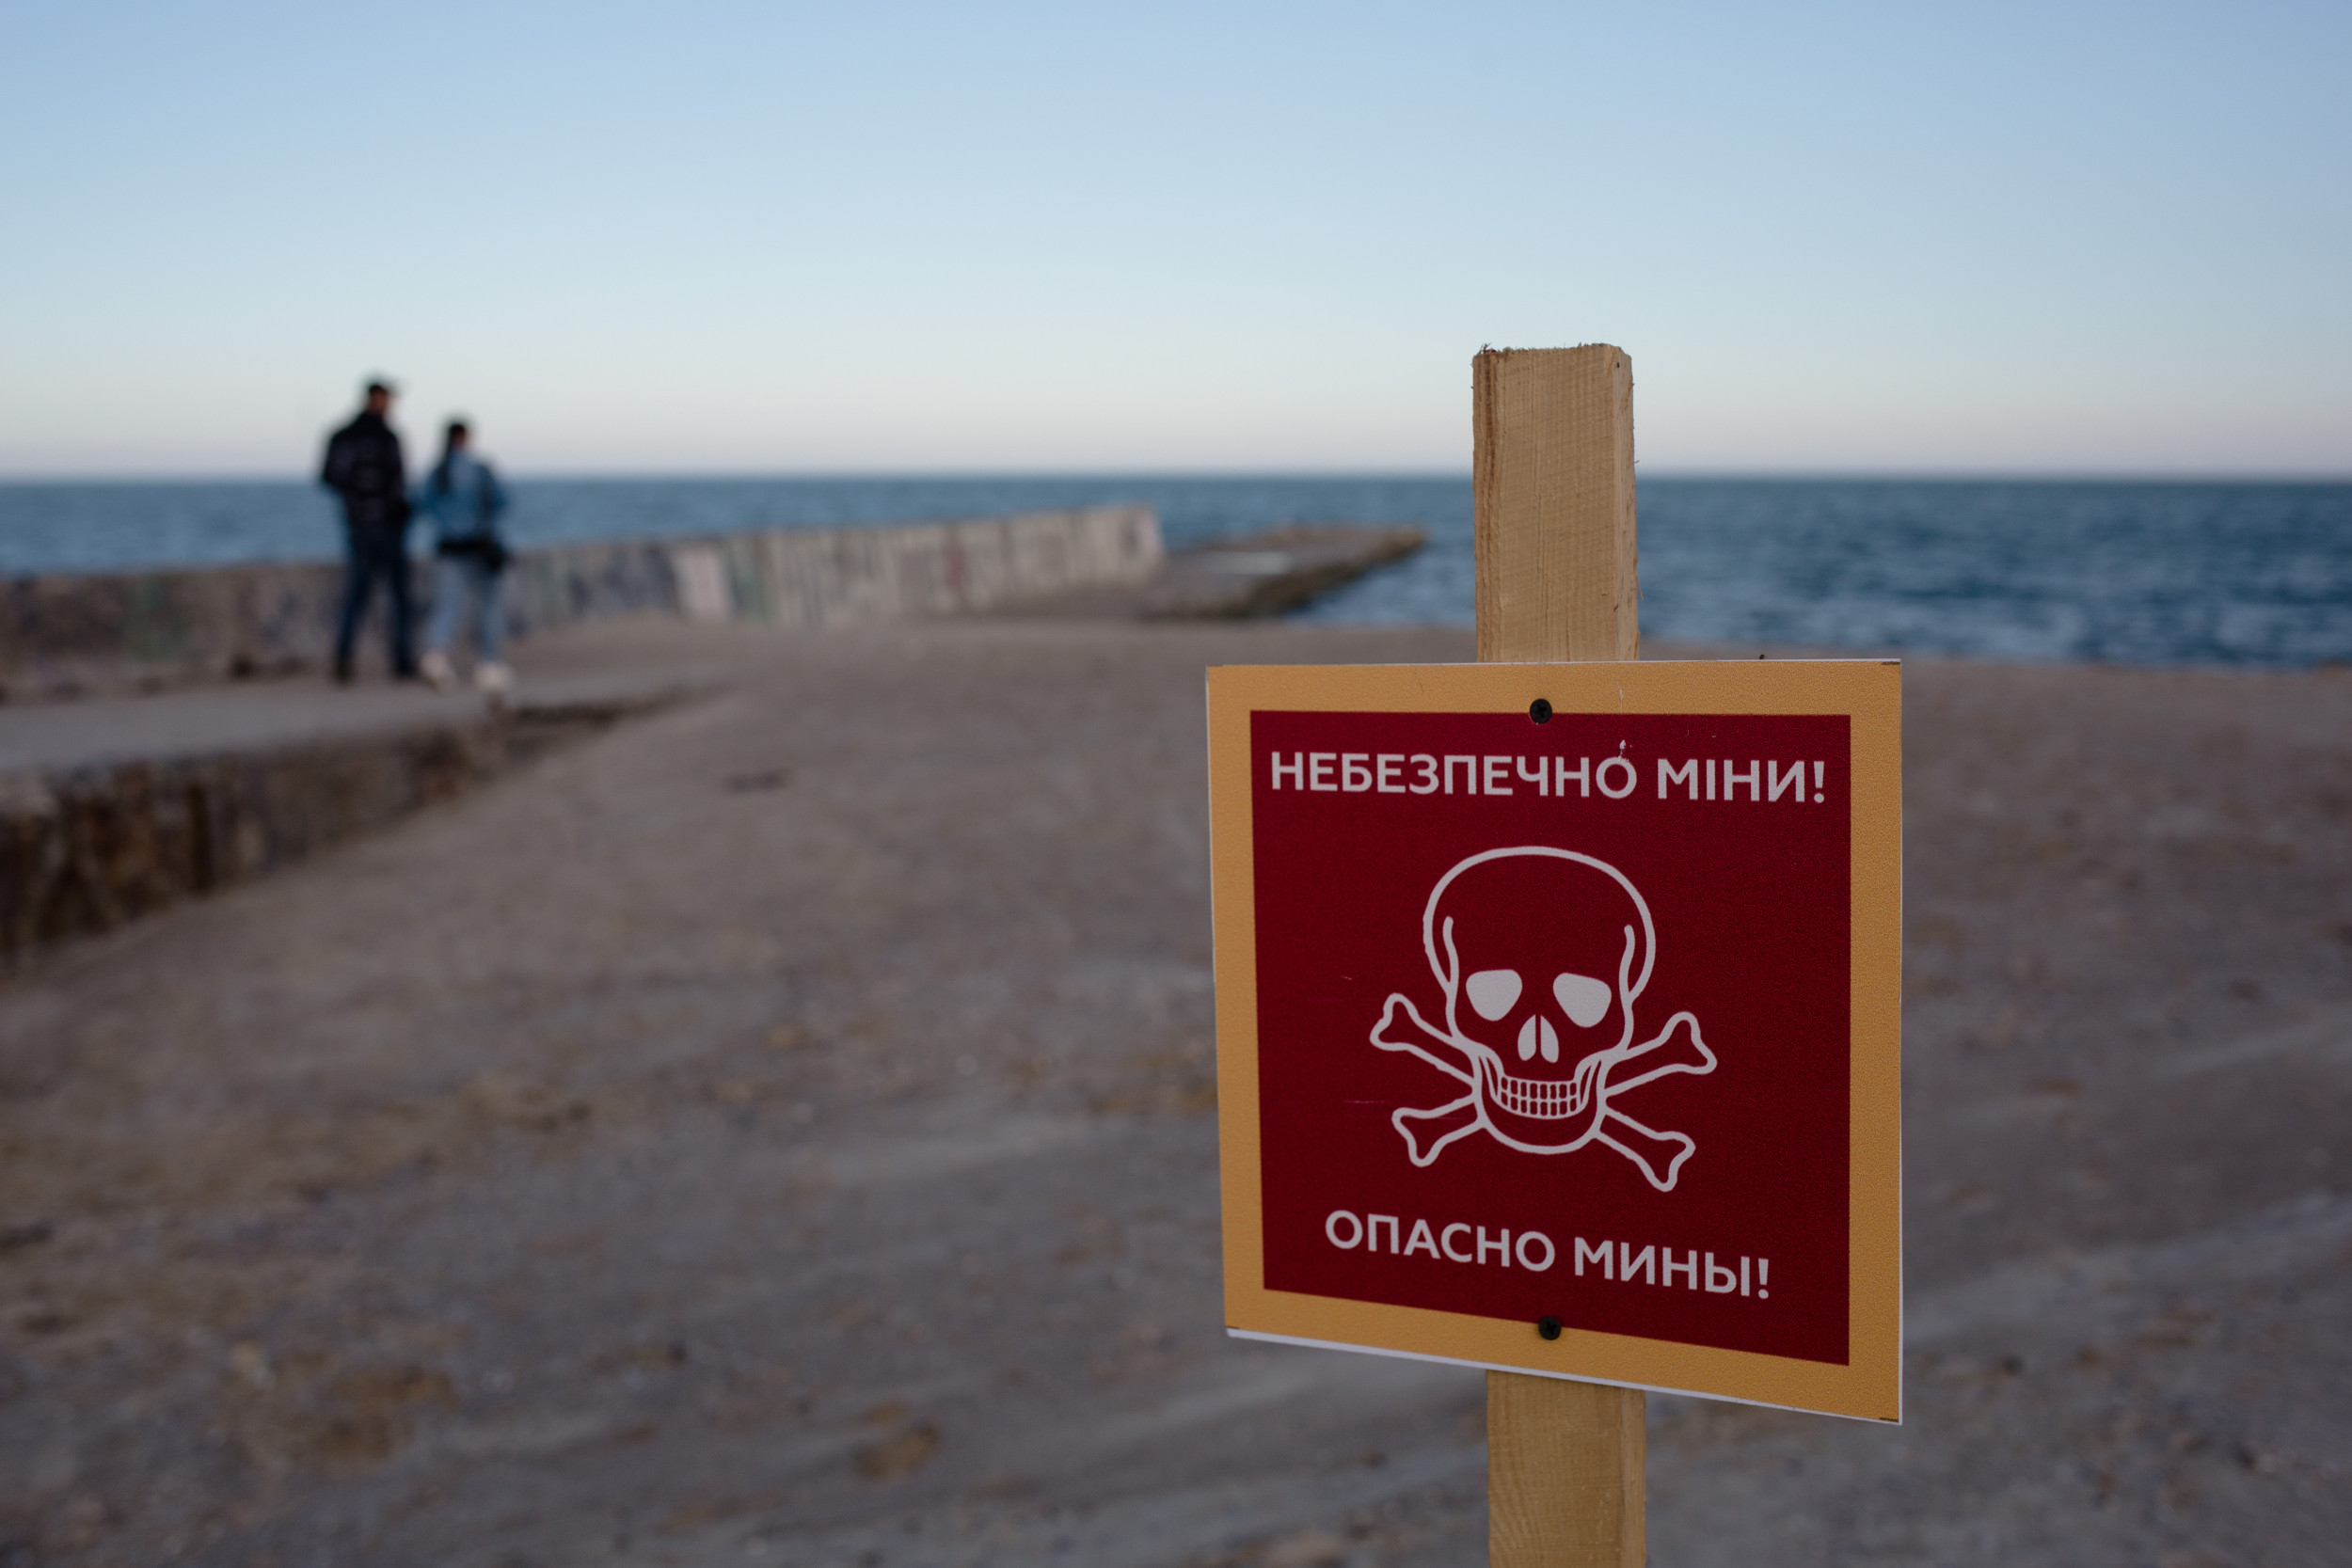 Mysterious Metal Spheres Wash Up on Ukraine Beaches